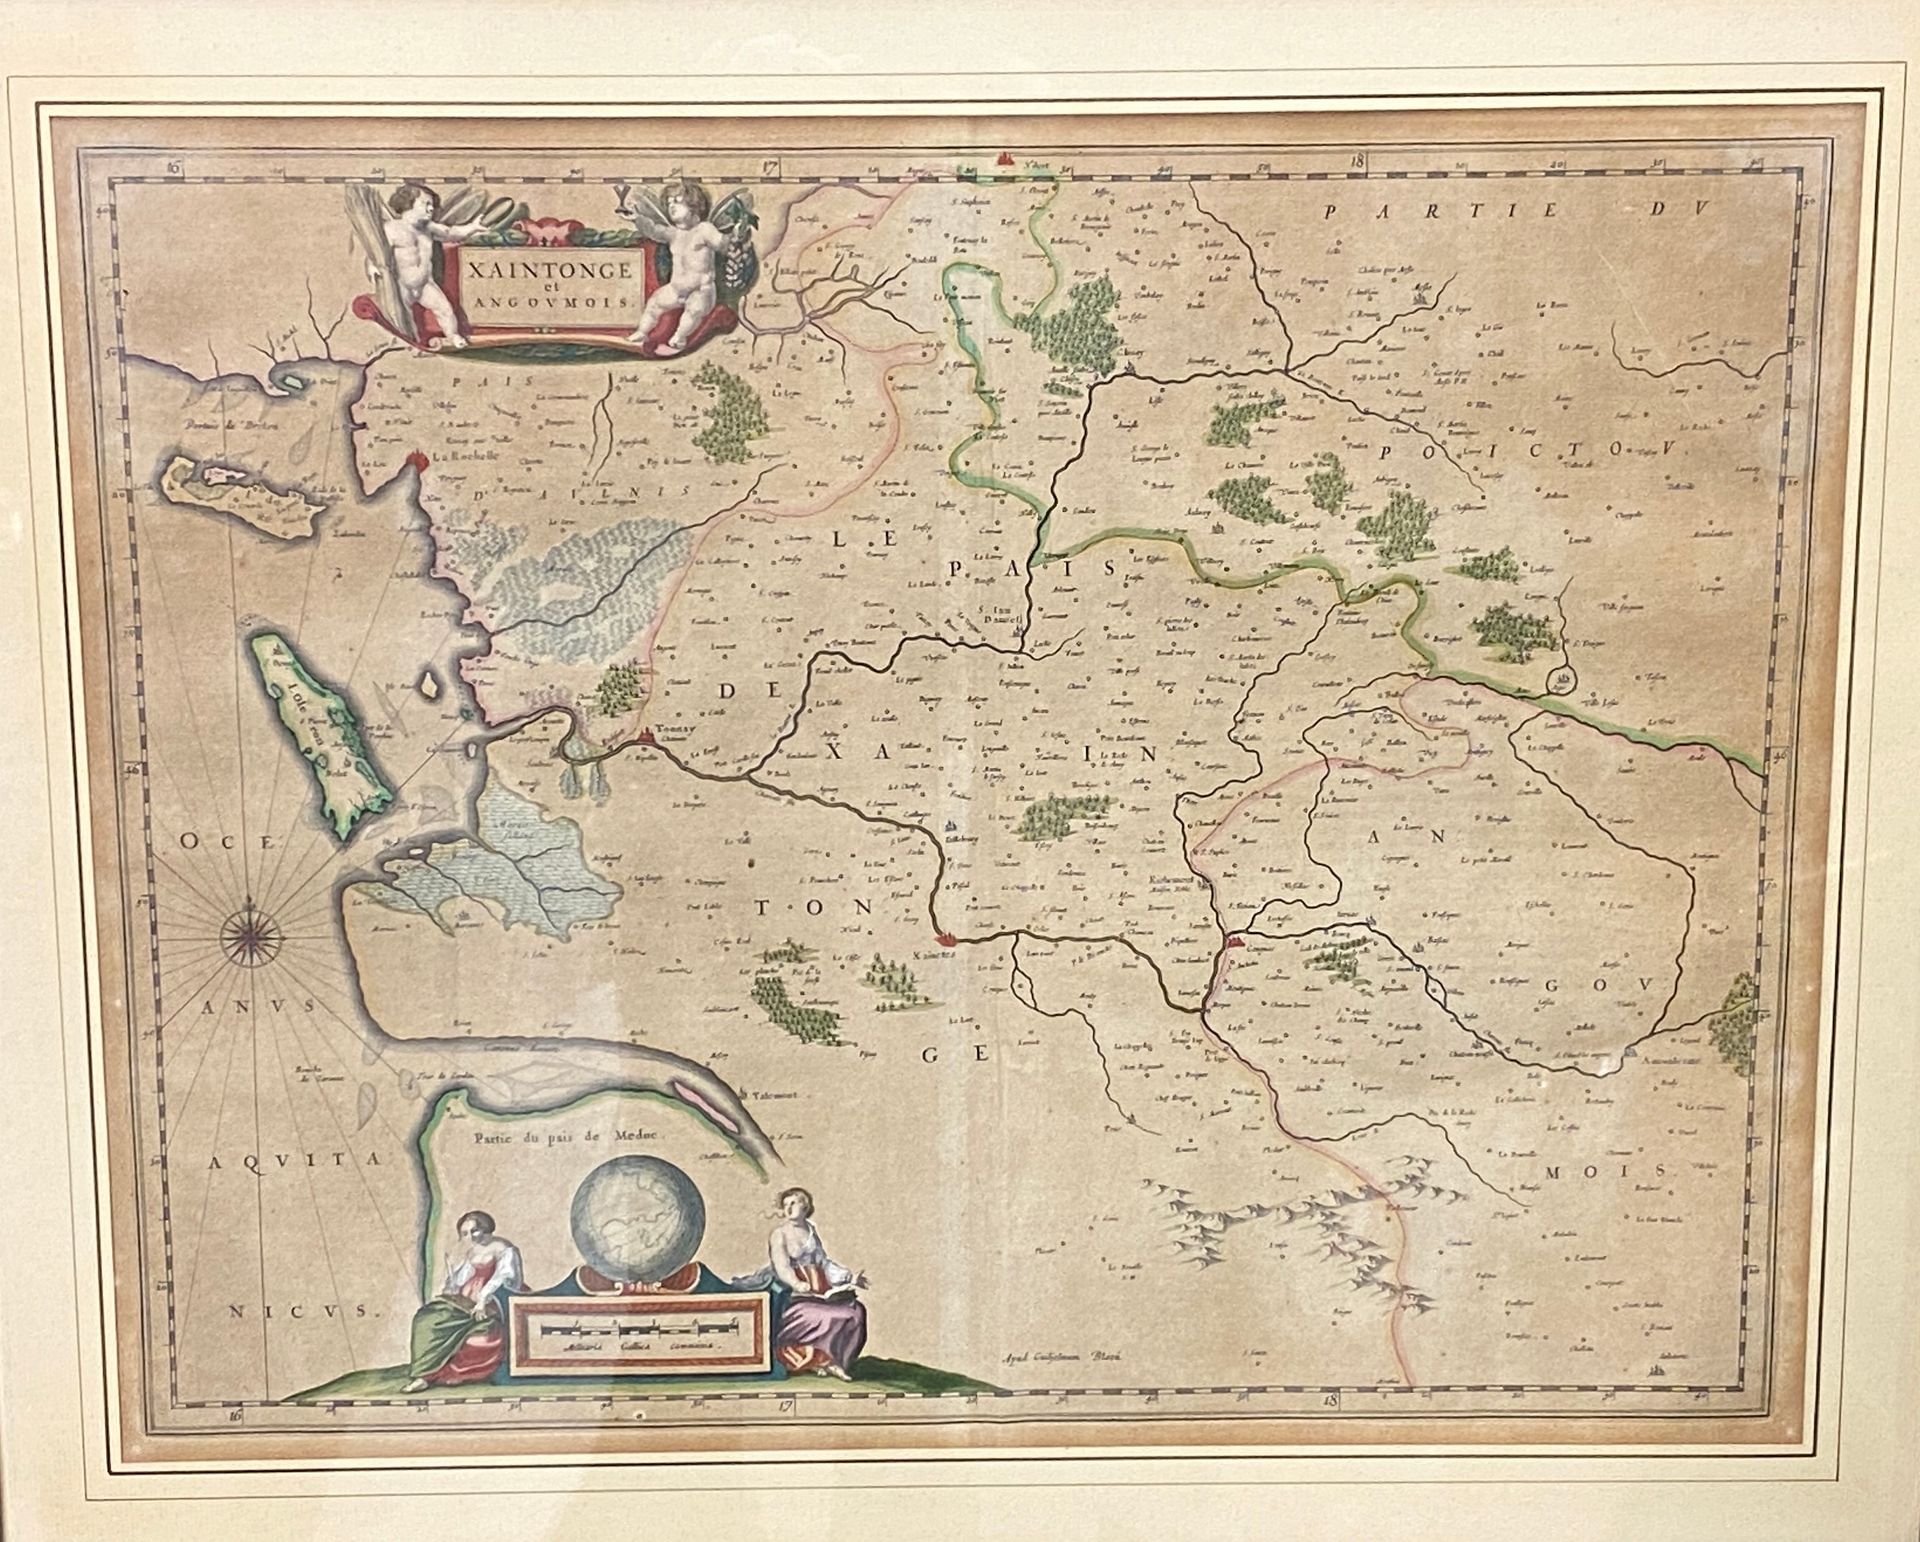 Null "Xaintonge和Angoumois

彩色地理地图

18世纪

41 x 51,5 cm (视图)

"诺曼底亚总督府

1692年黑色的地理&hellip;